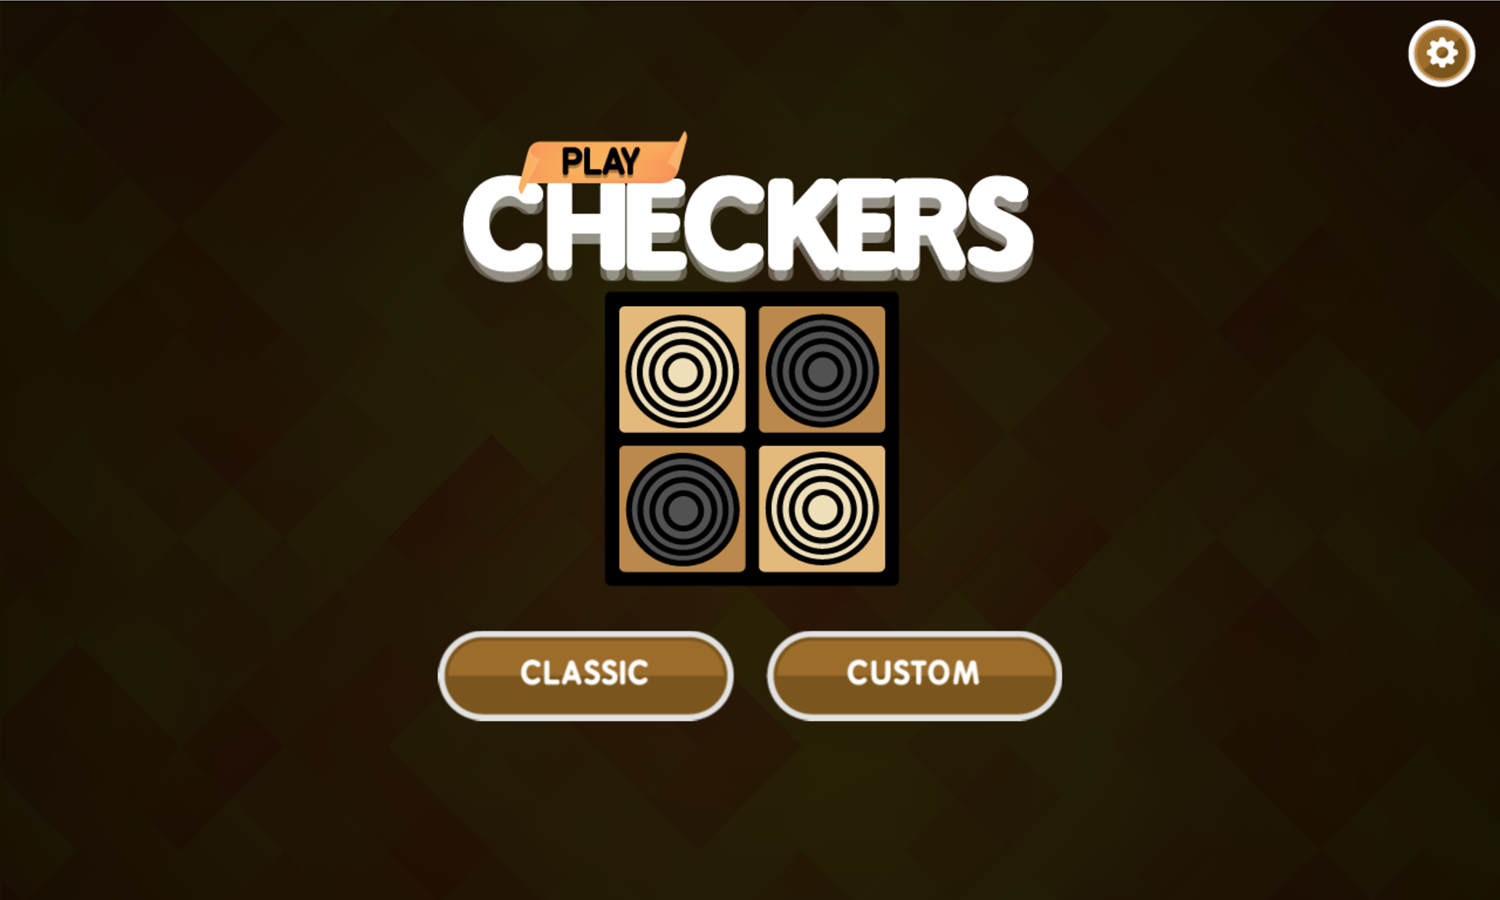 Play Checkers Game Welcome Screen Screenshot.